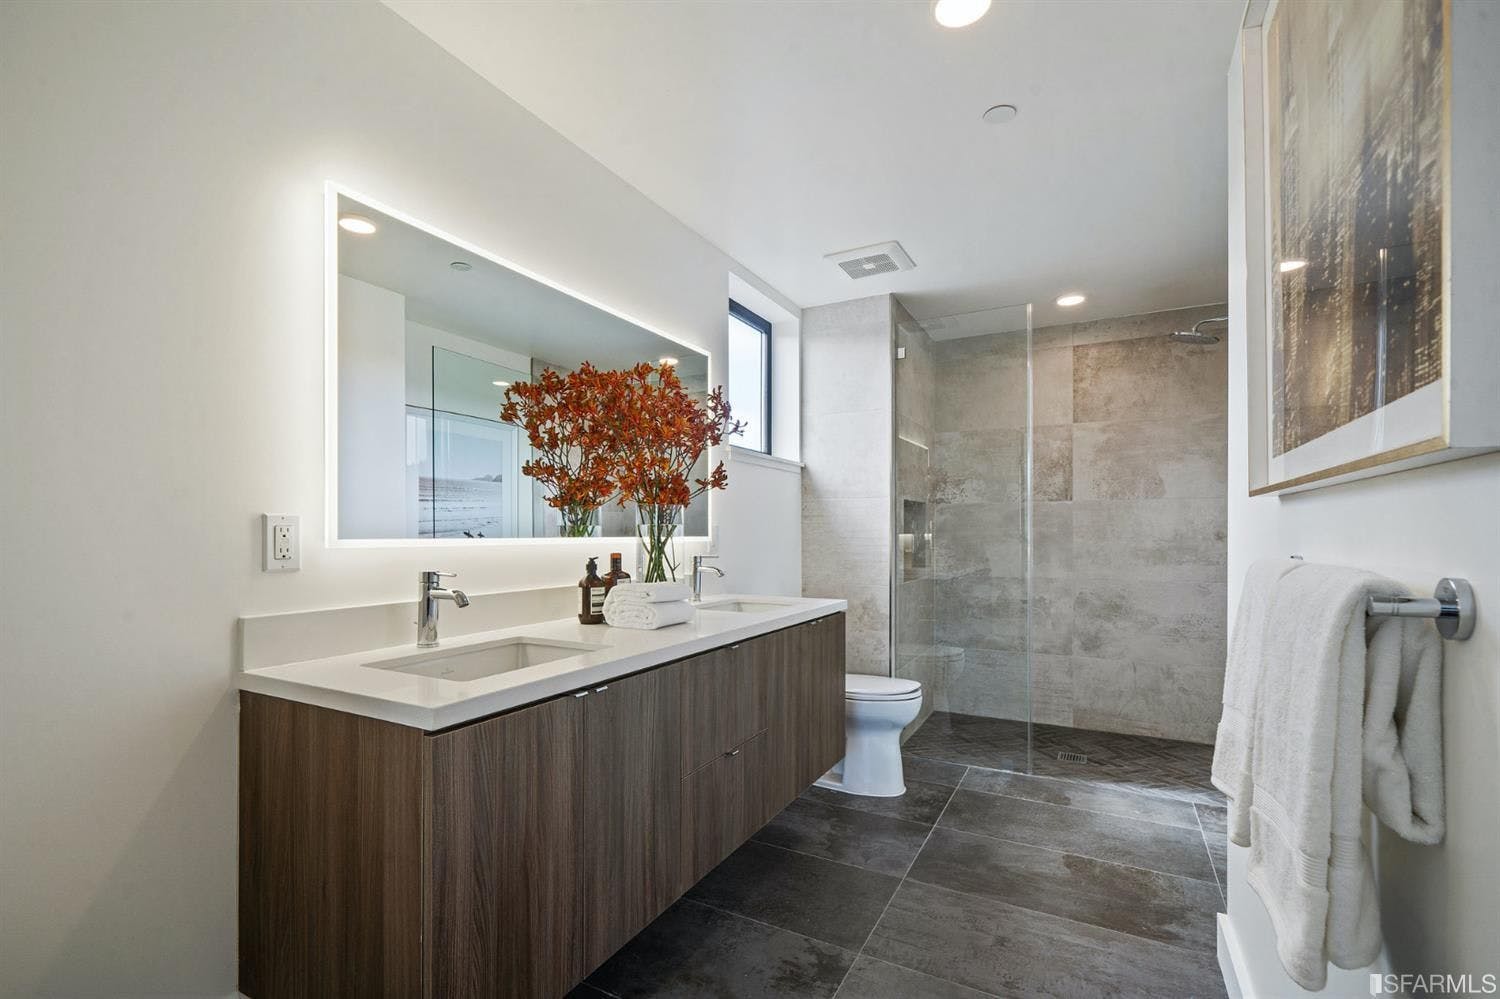 Quartz countertops, floating vanities, and dark tile flooring work together to create a sleek, modern atmosphere in bathrooms of Mission Modern.